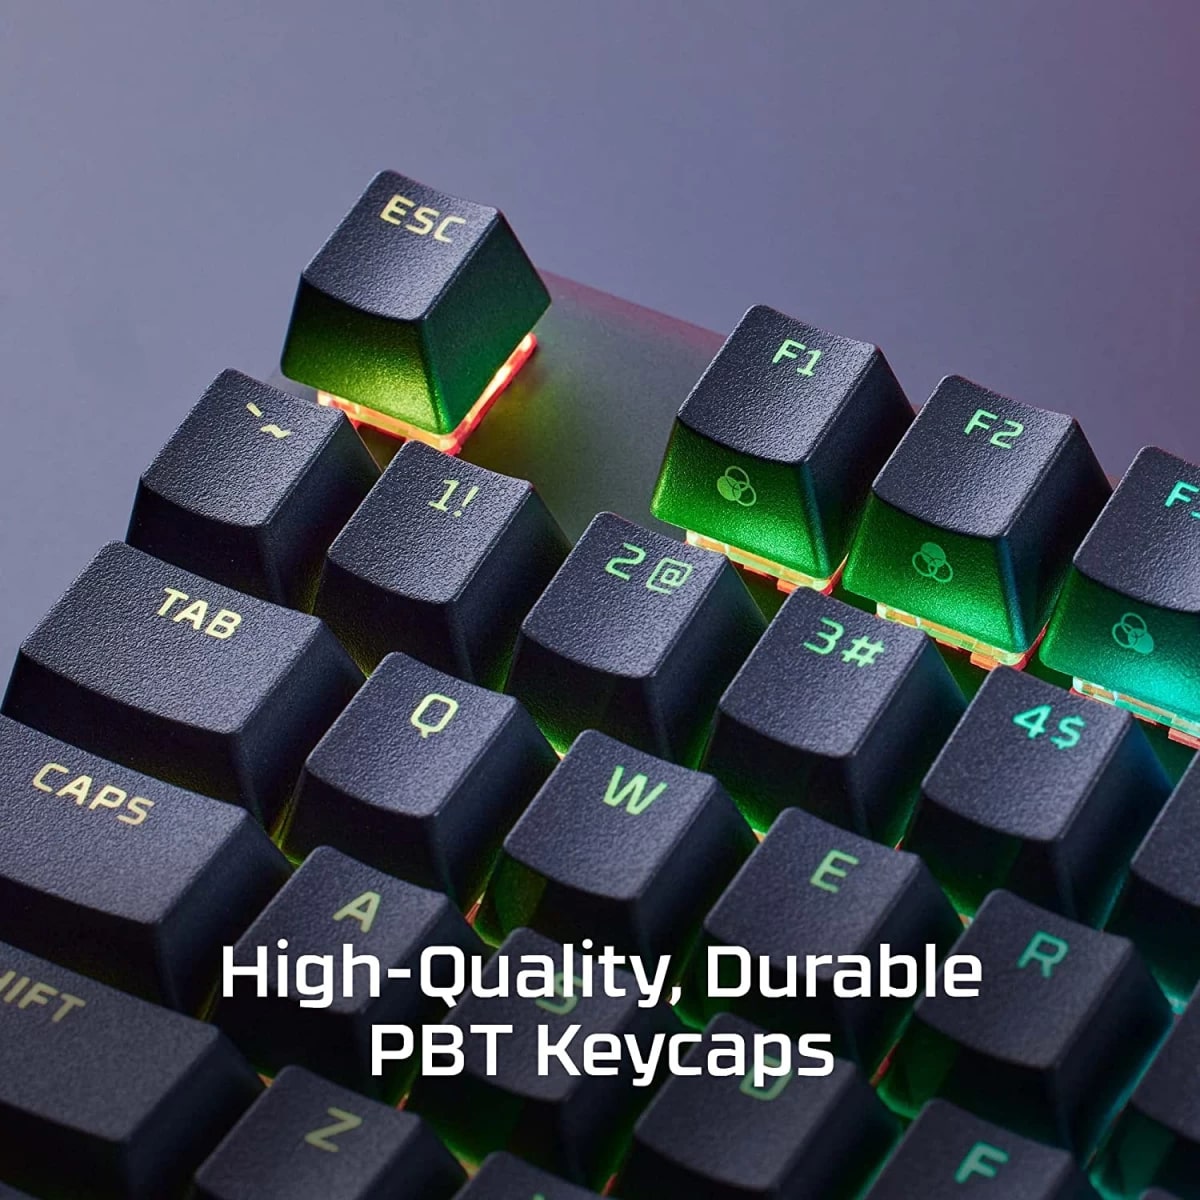 HyperX TKL Mechanical Gaming Keyboard by Alloy Origins Core BT